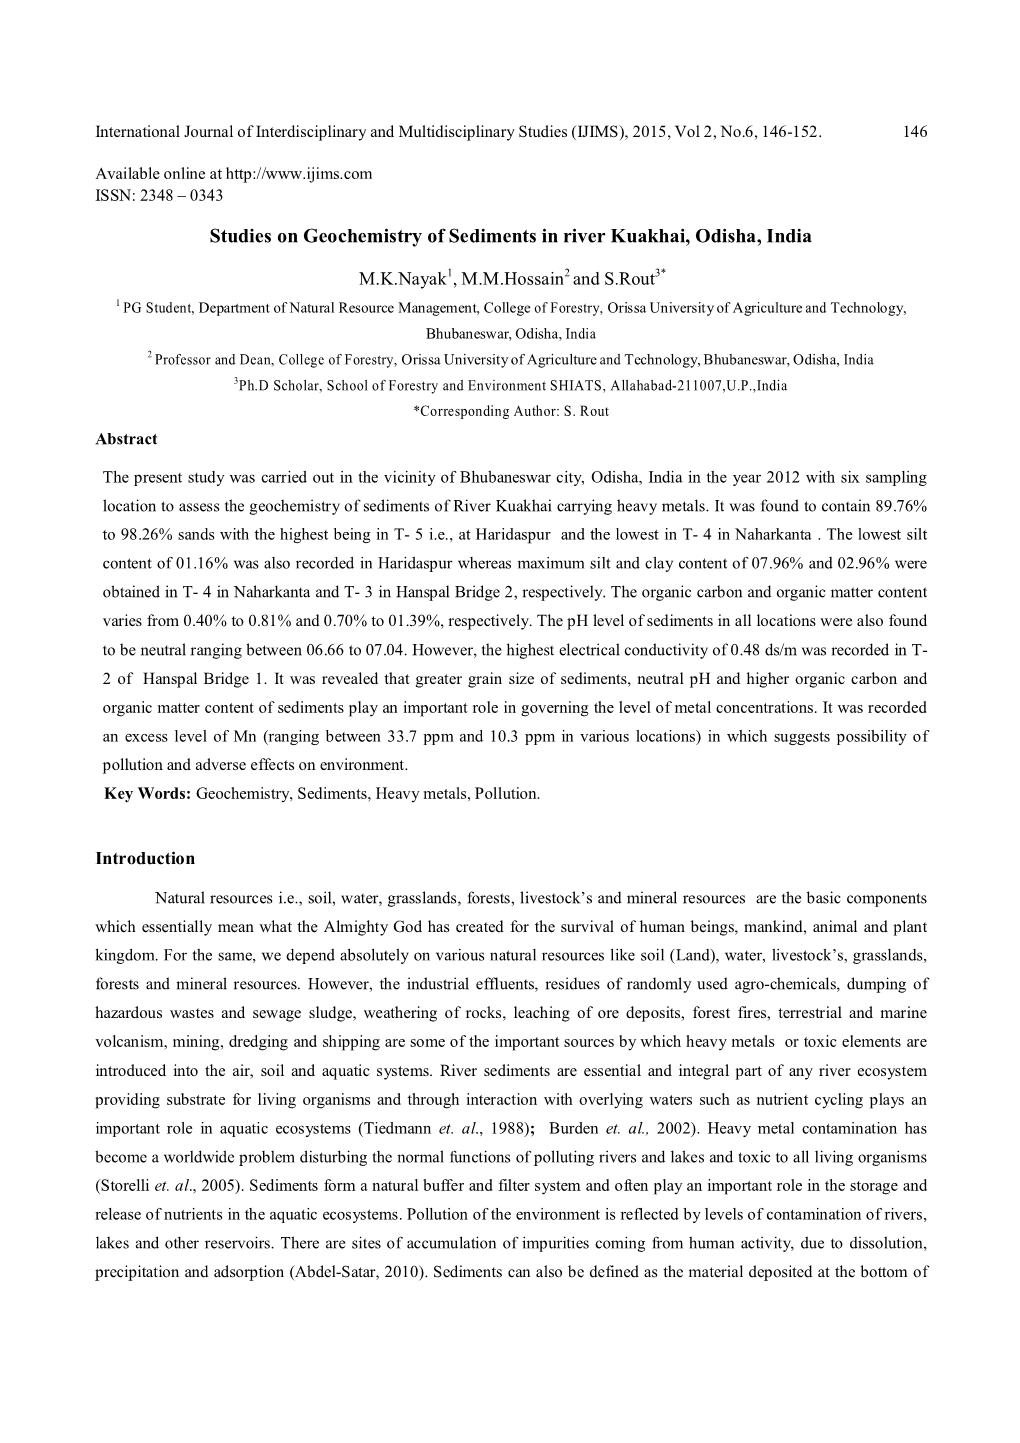 Studies on Geochemistry of Sediments in River Kuakhai, Odisha, India